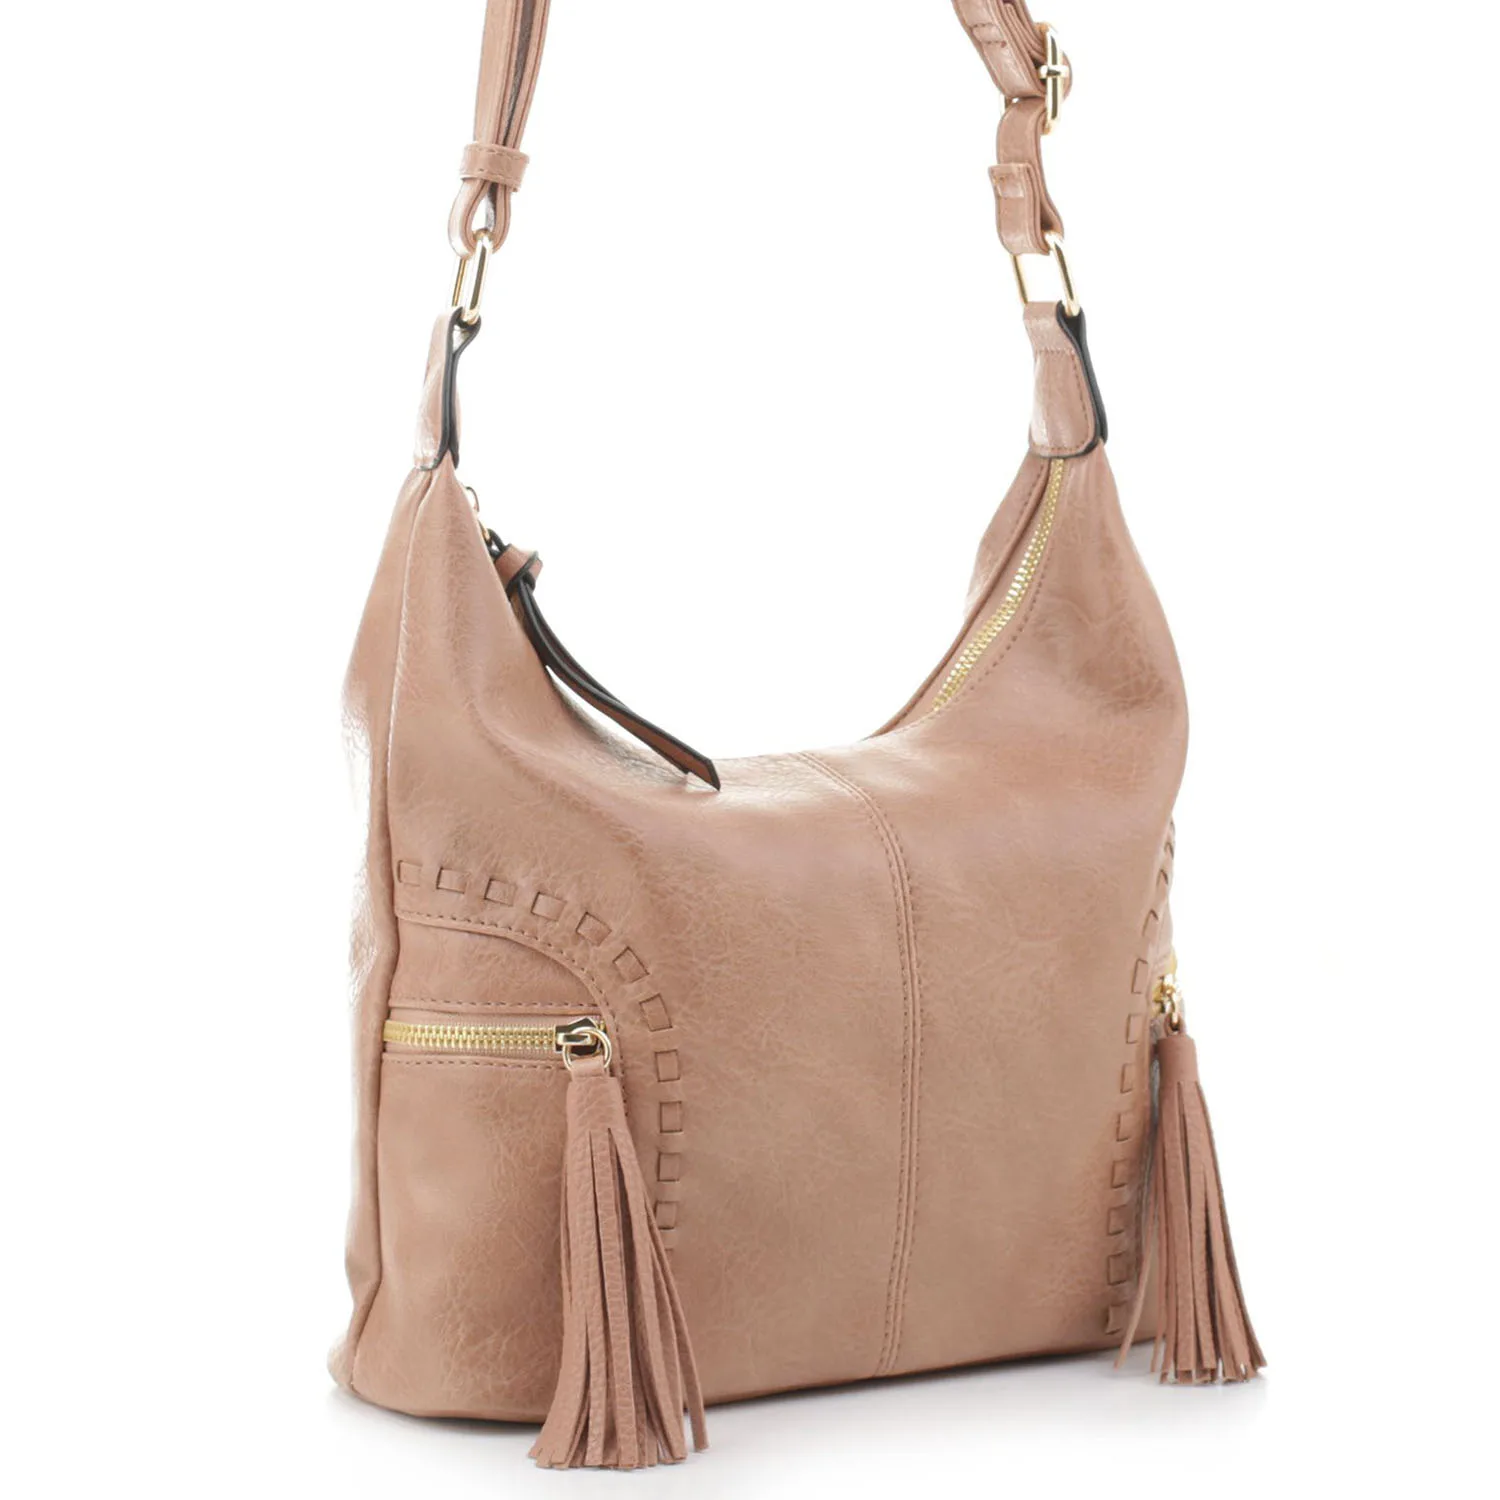 

Wholesale Classic Trend Bag Women Tassel Satchel Ladies Shoulder Bag Vegan Leather Handbags for Women, More